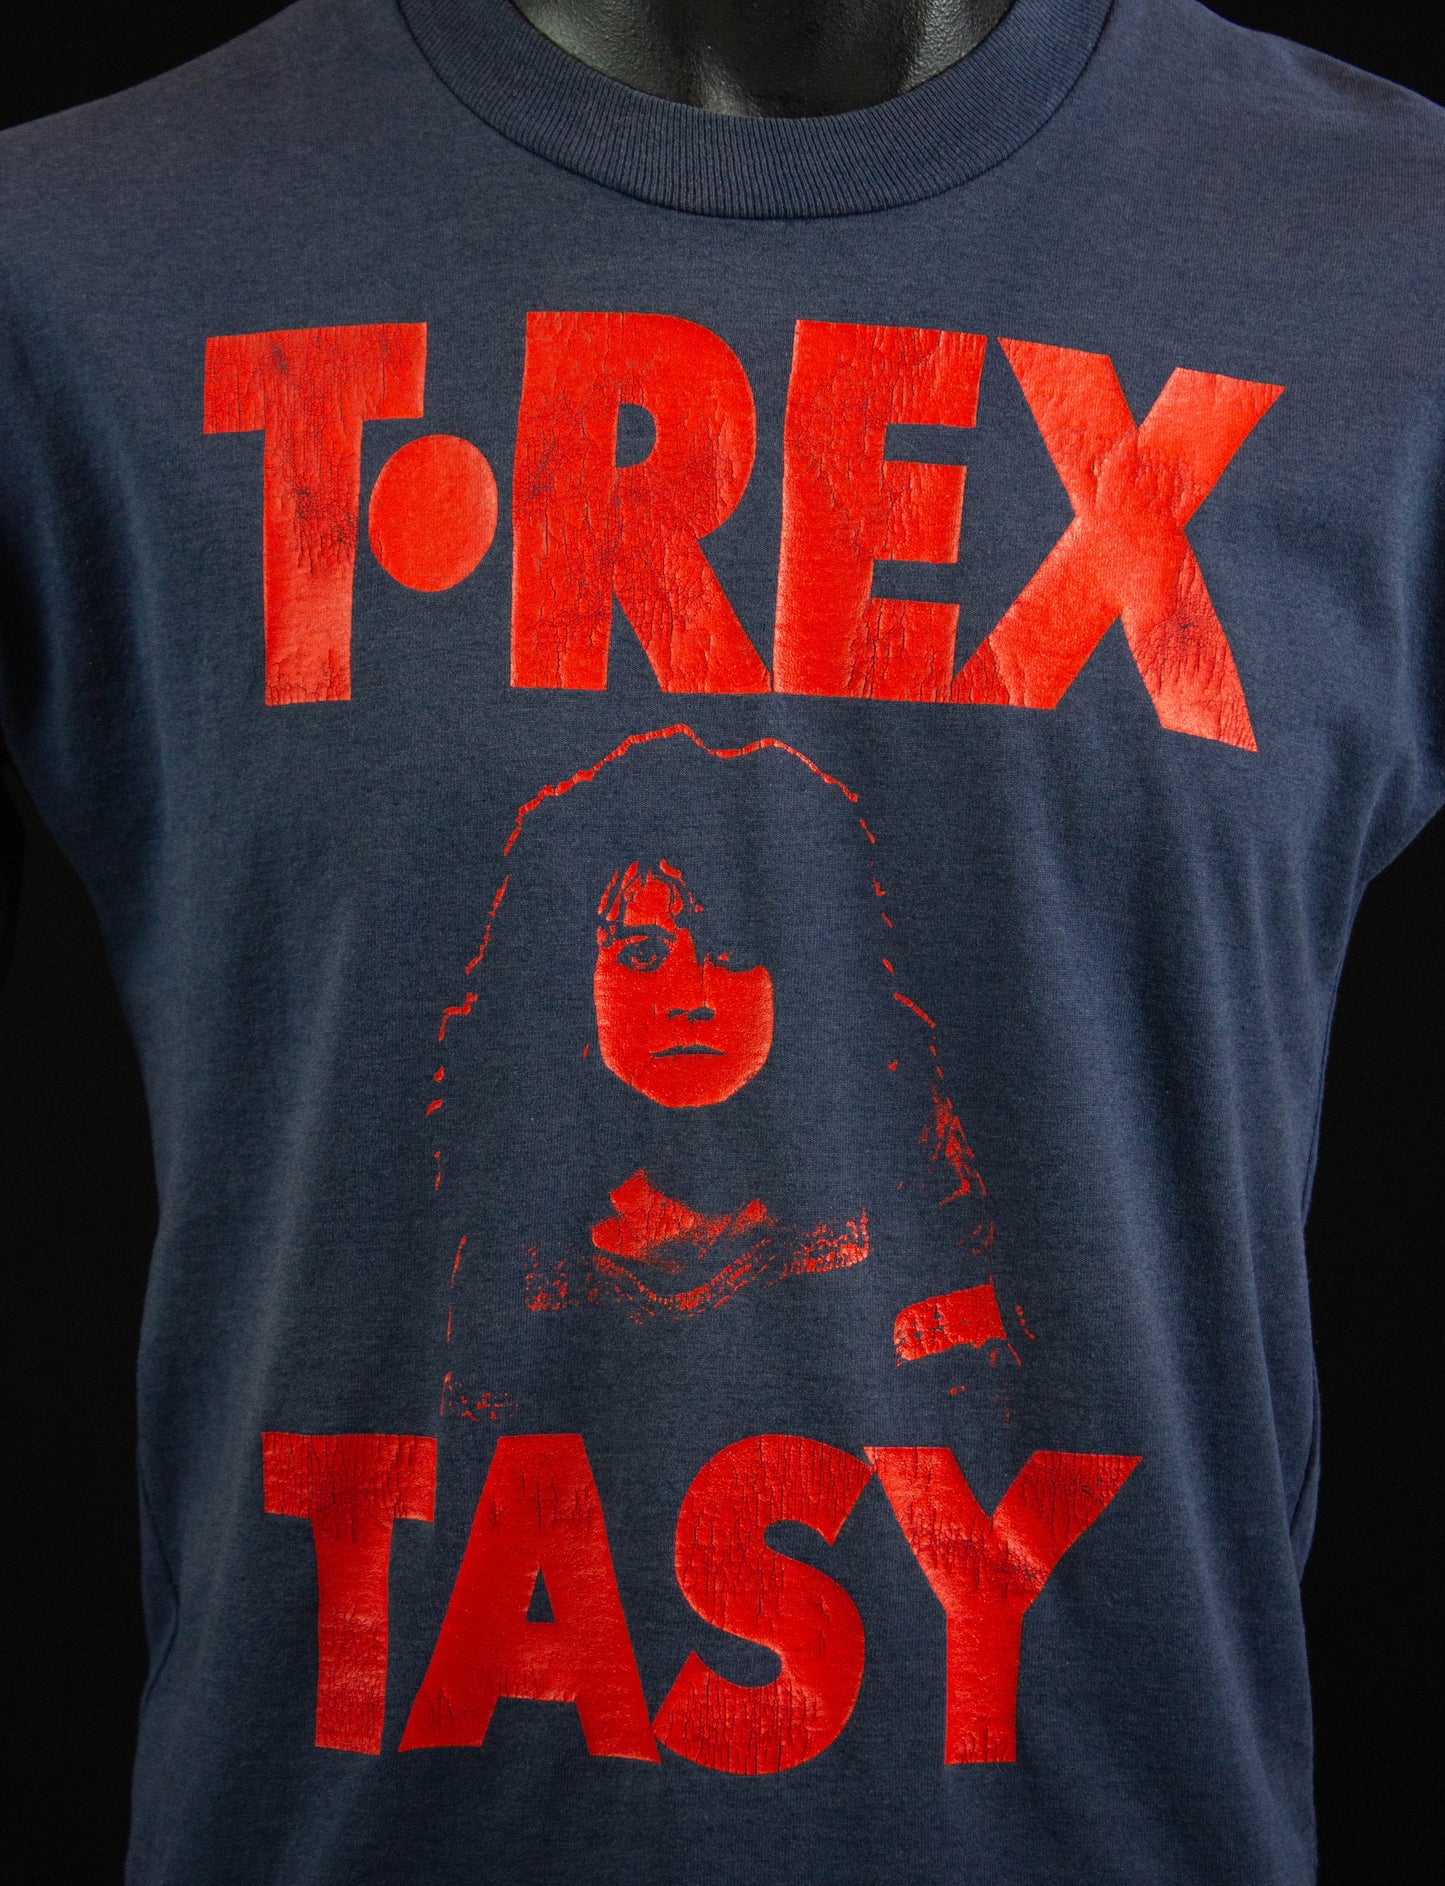 Vintage T. Rexstasy Concert T Shirt 90s UK Tour Navy Blue and Red Medium